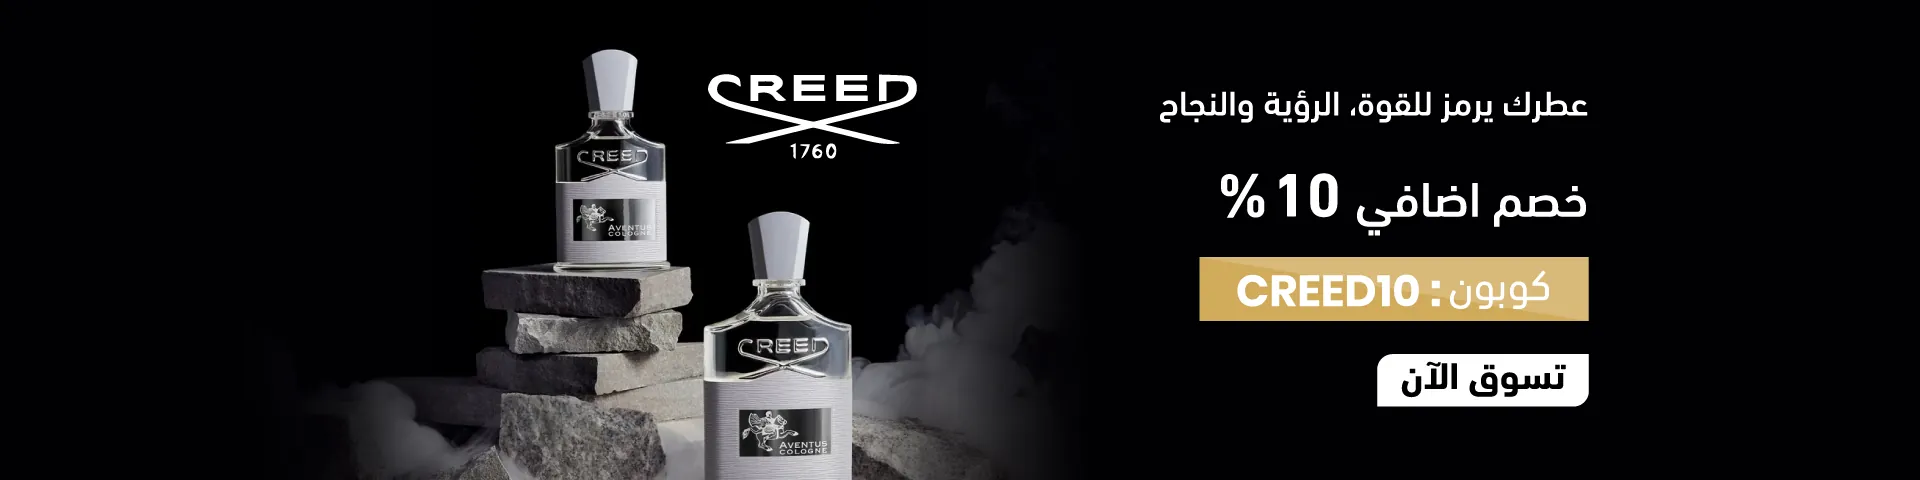 hajj-perfume-creed-banner-websitenew-media